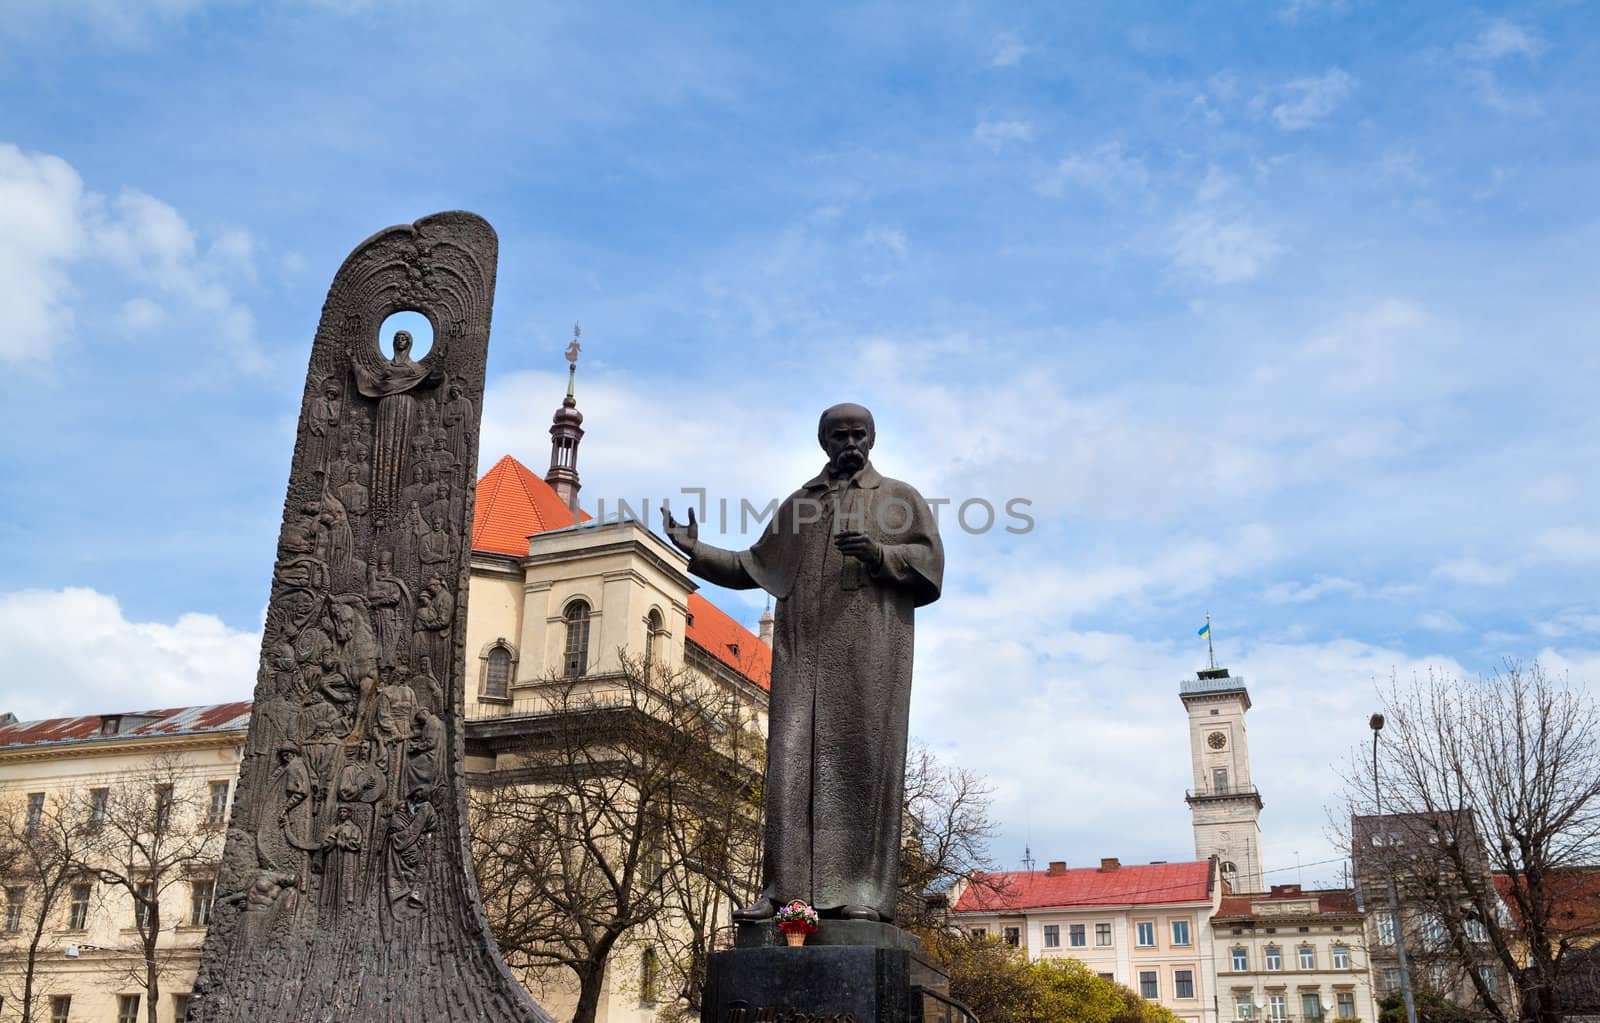 Taras Shevchenko monument in Lviv (Lemberg) by catolla